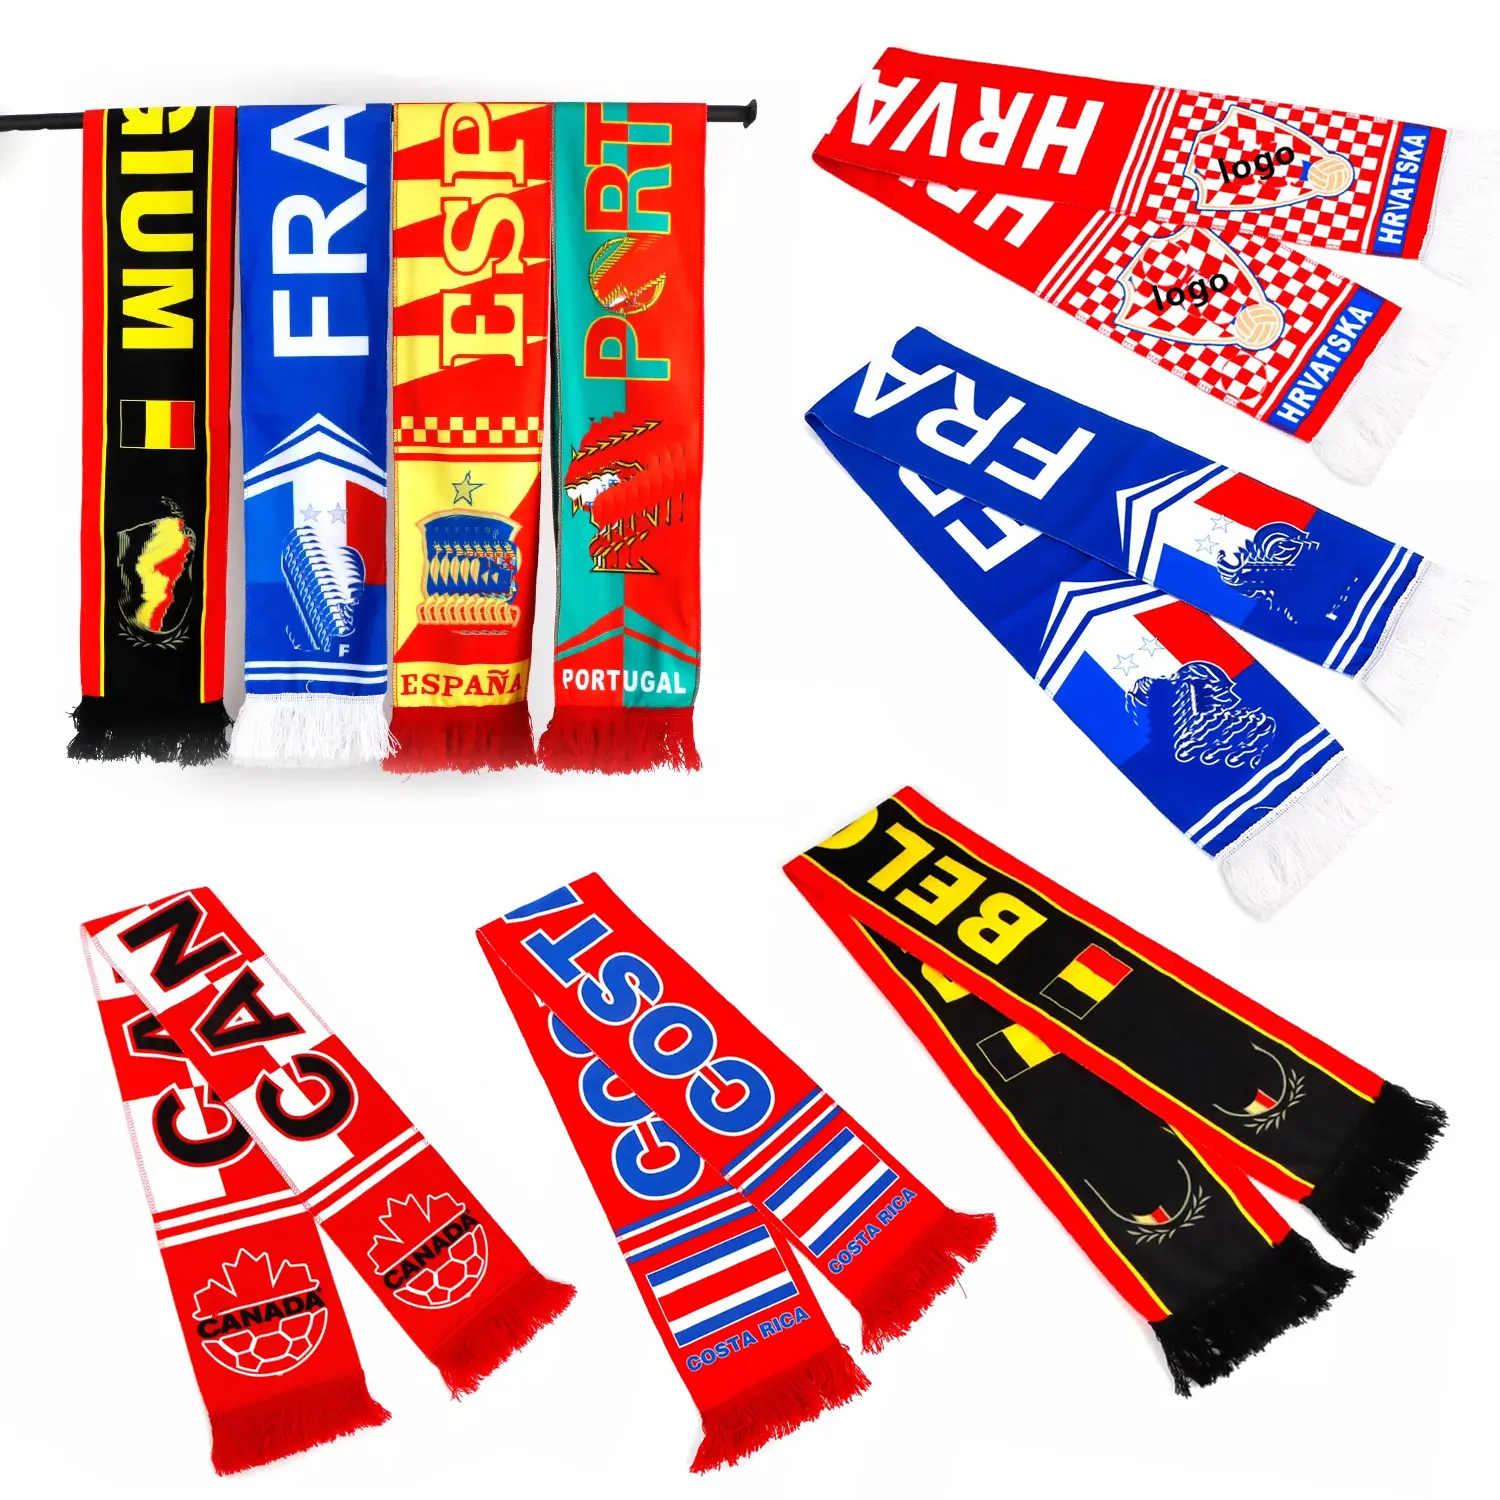 Promotional traditional eritrea scarf digital printing with eritrean scarves custom eritrea flag scarf